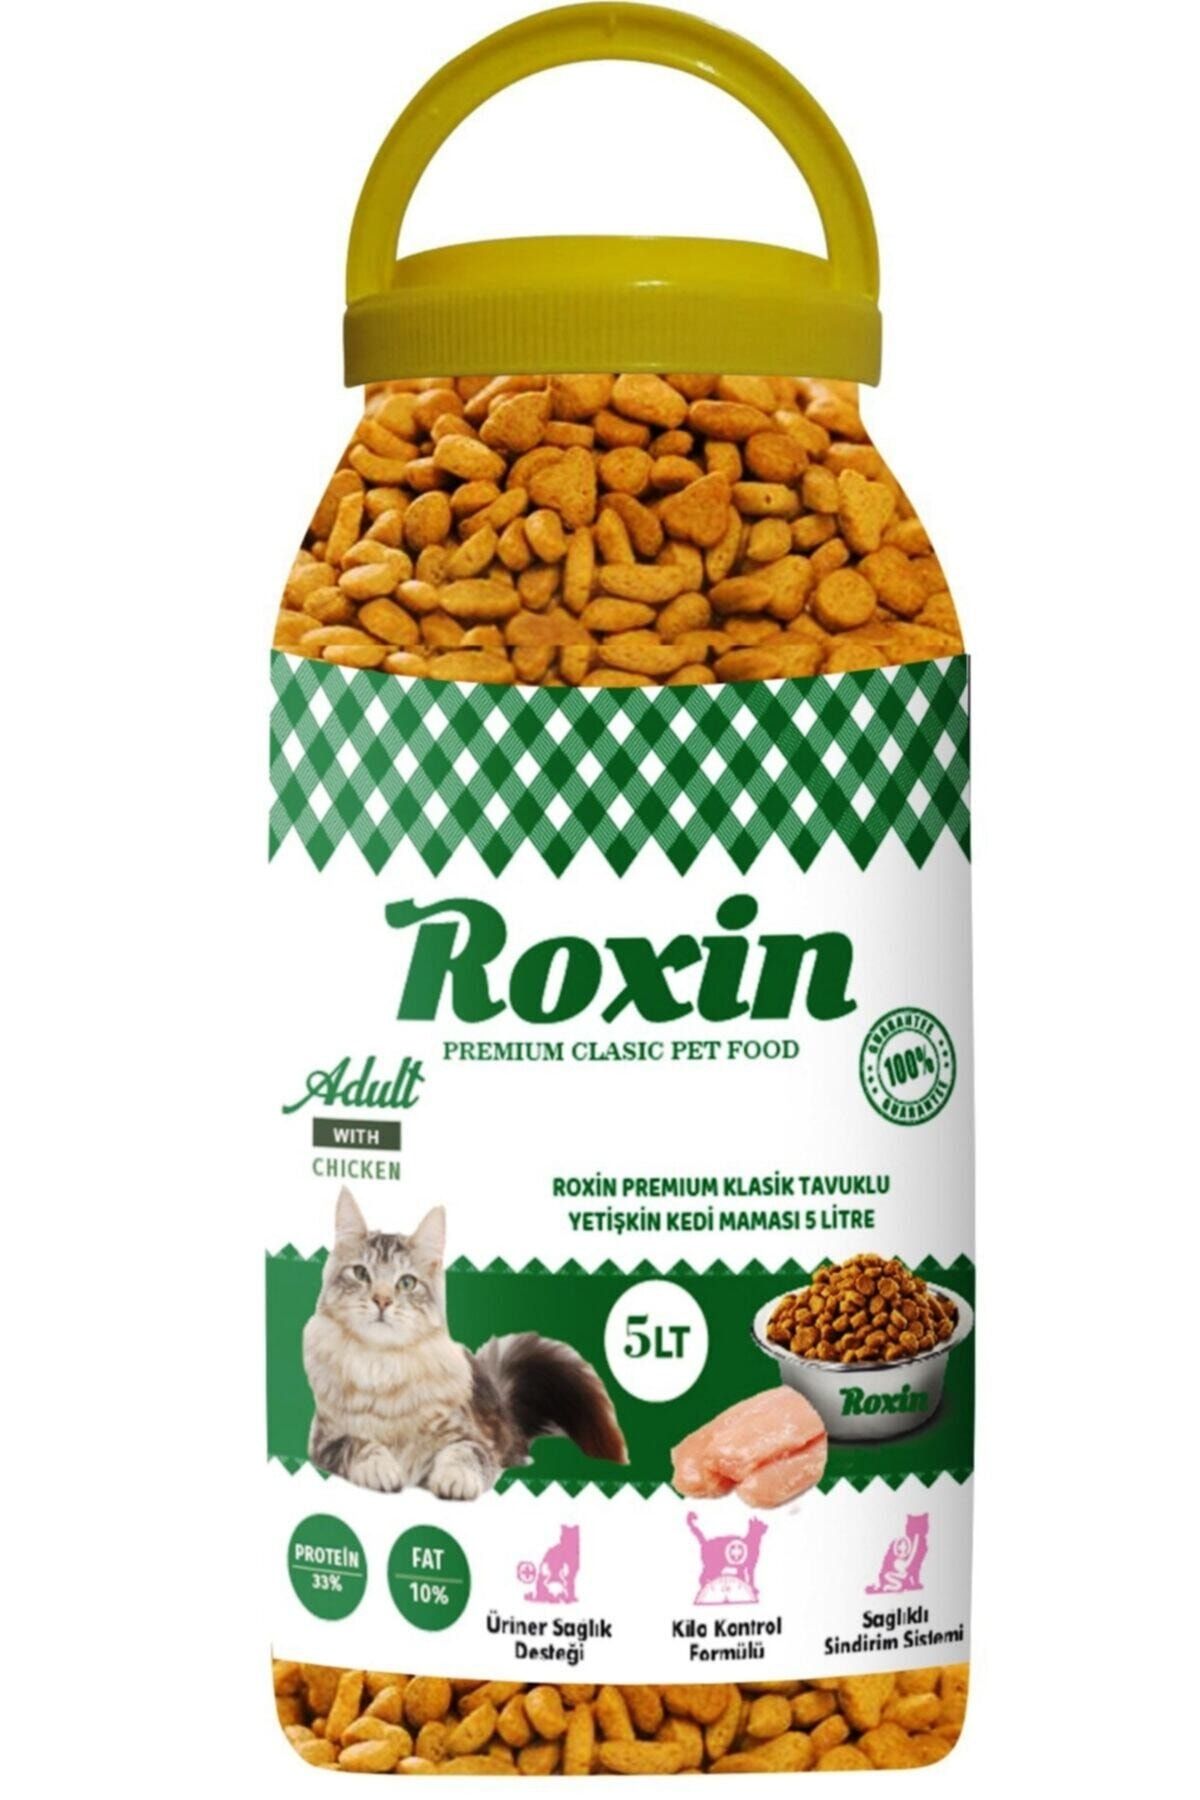 Roxin Premıum Klasik Tavuklu Yetişkin Kedi Maması 5 Lt